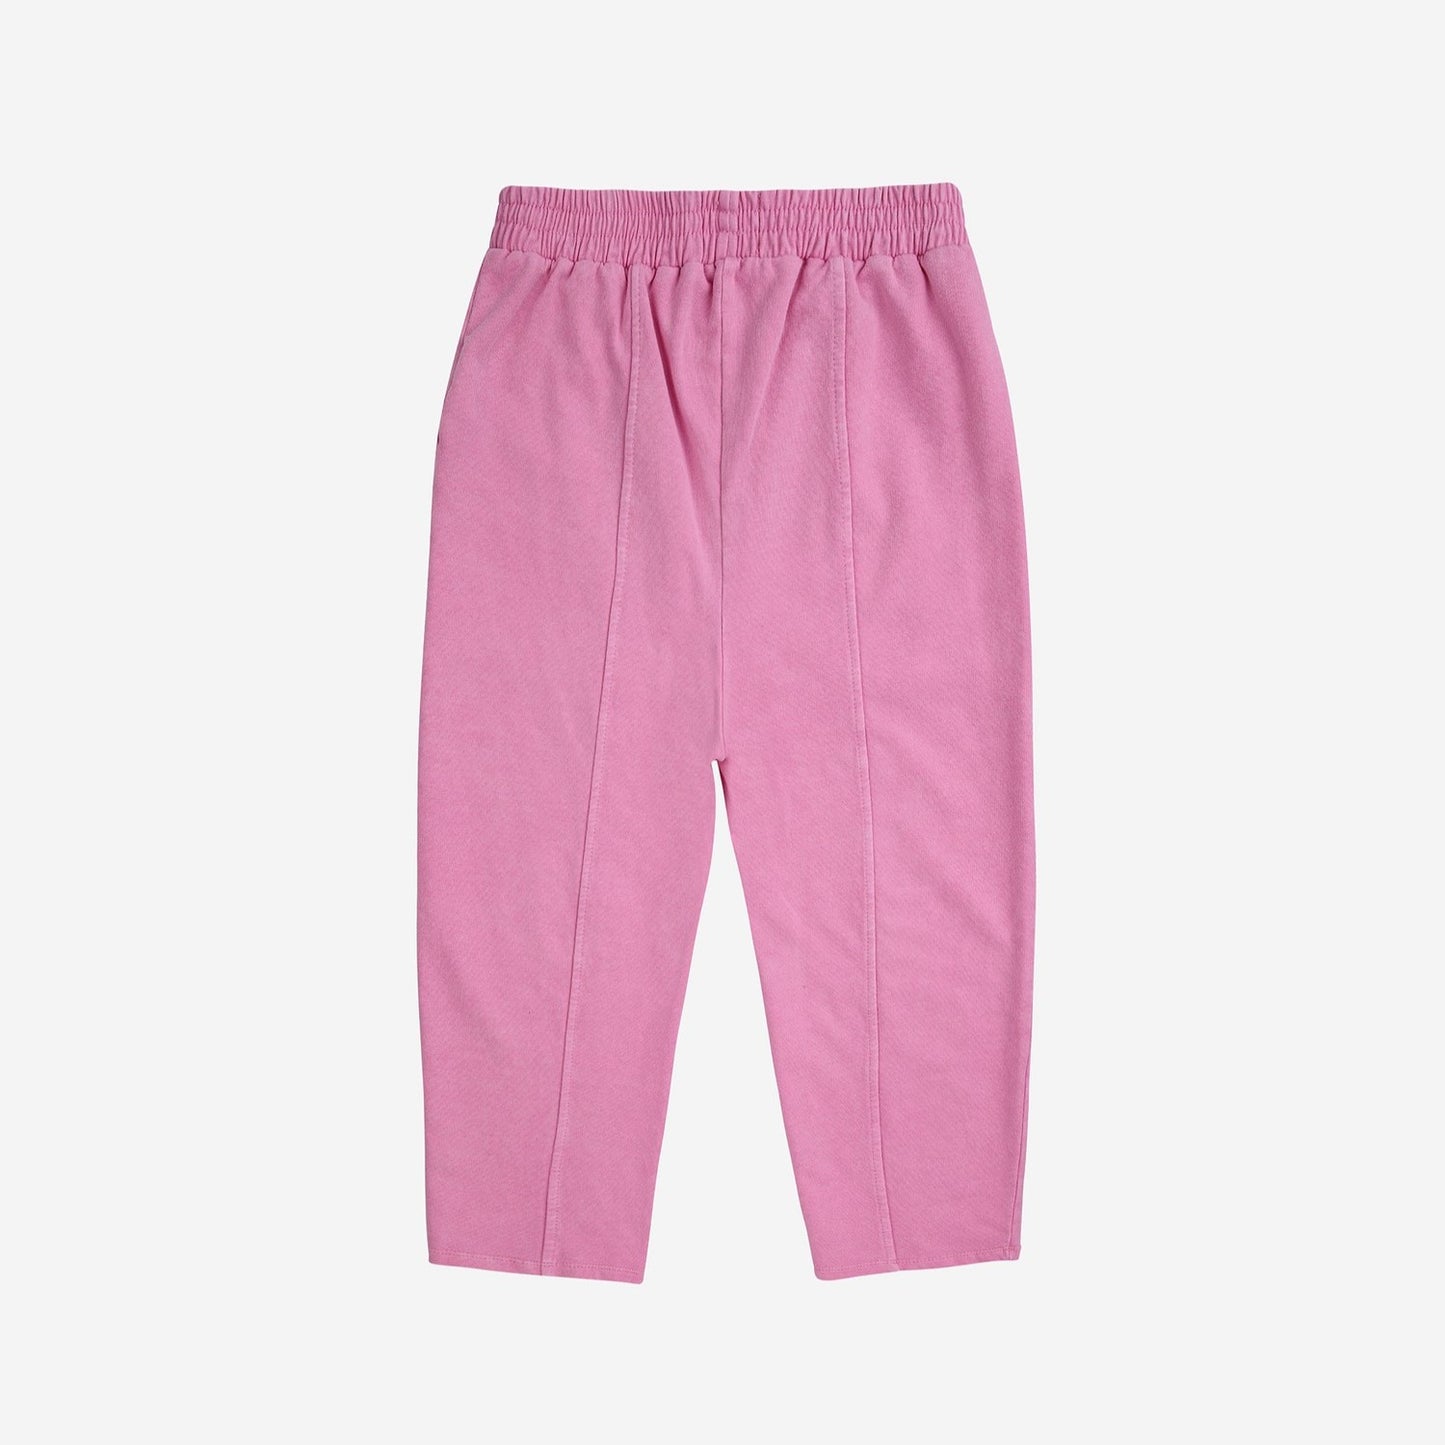 BOBO CHOSES B.C Pink Jogging Pants ALWAYS SHOW